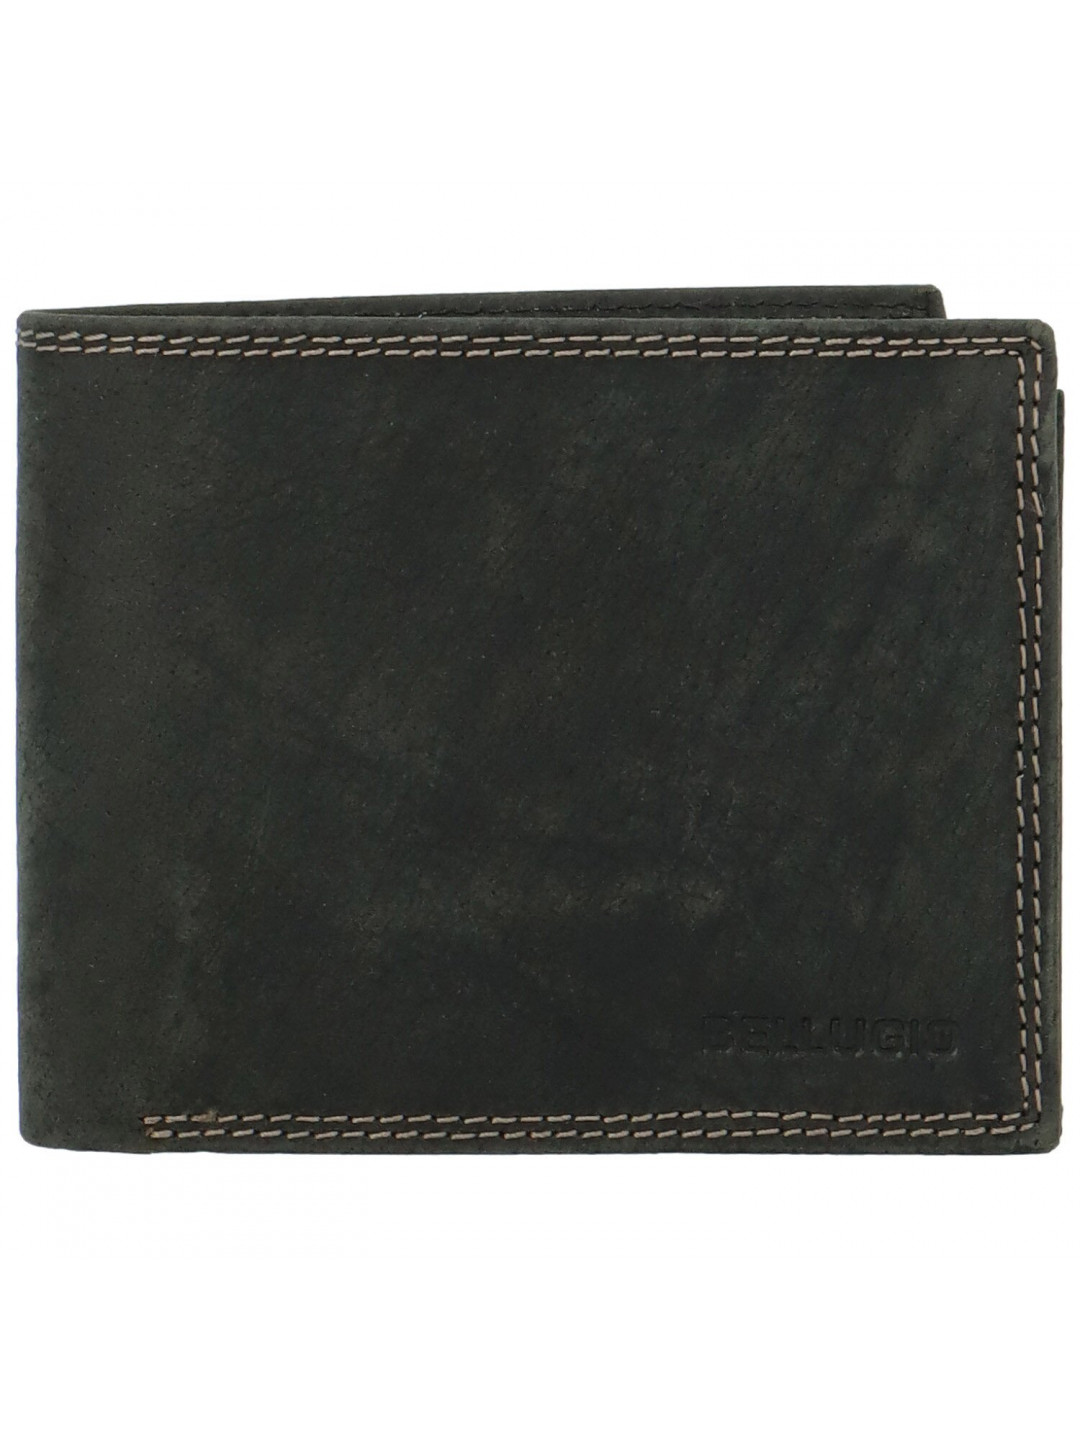 Pánská kožená peněženka Bellugio Silas černá